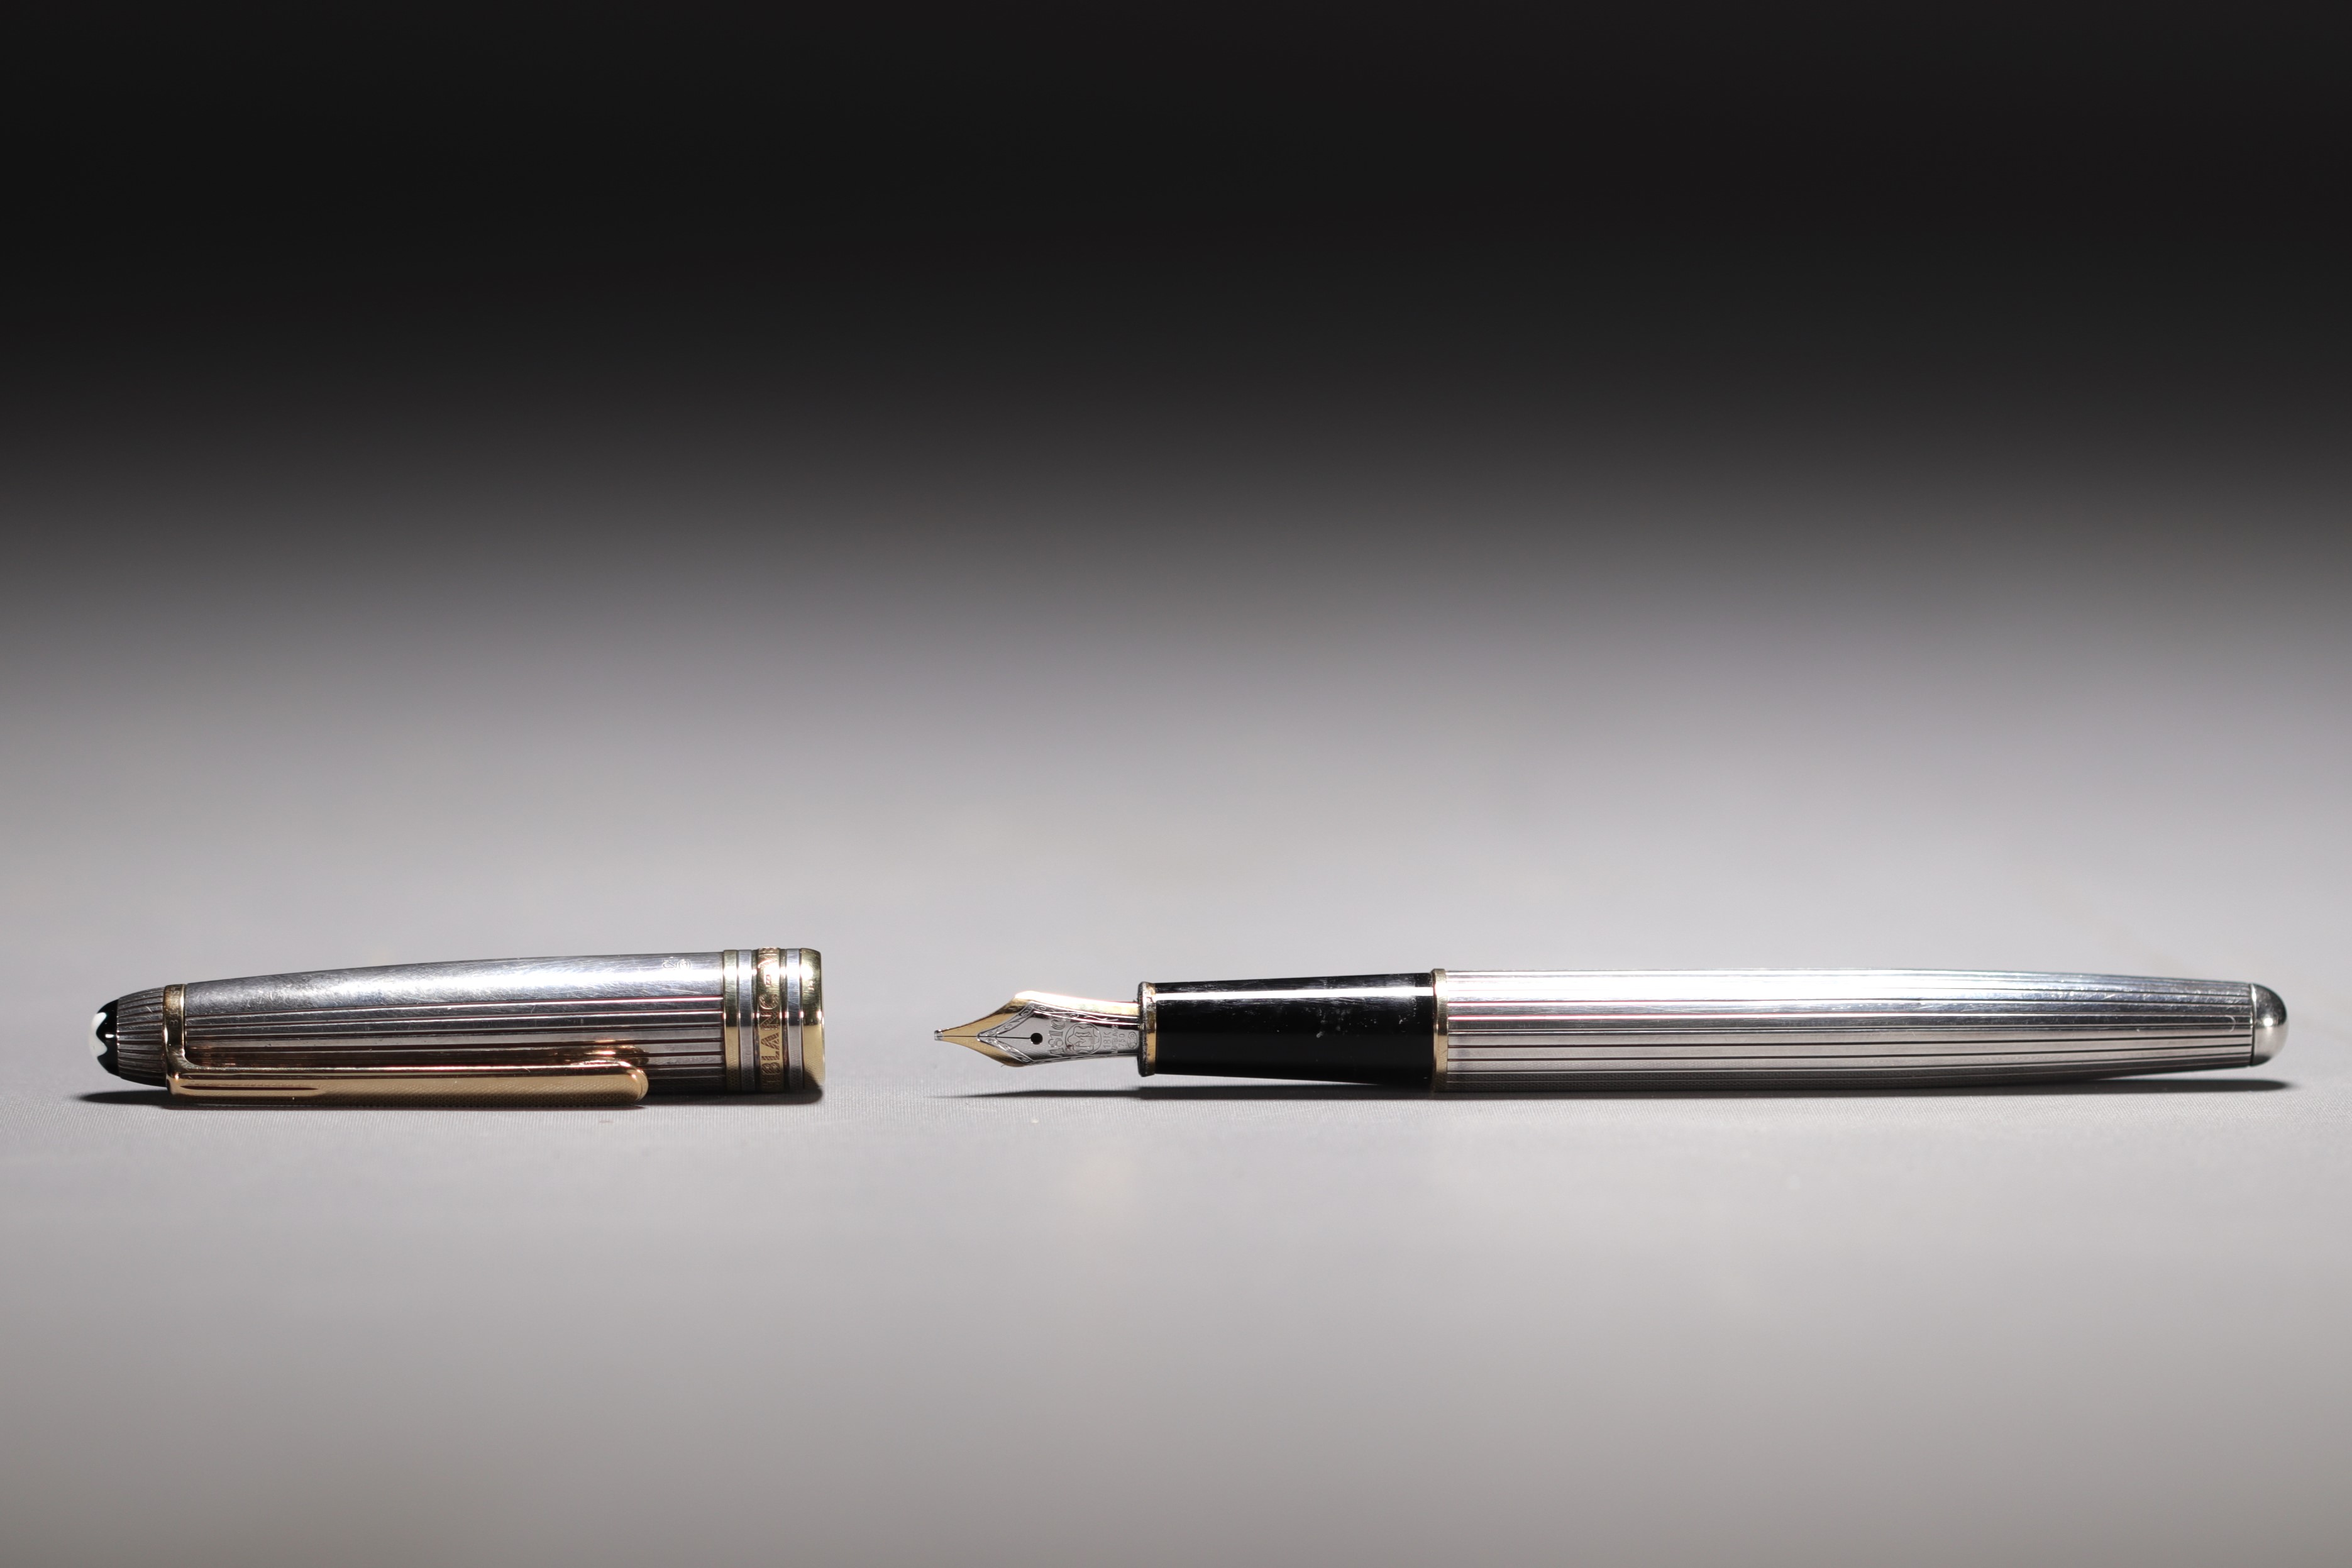 MONTBLANC - MEISTERSTUCK MOZART pen and nib holder set in sterling silver 925, 18K gold nib. - Image 4 of 5